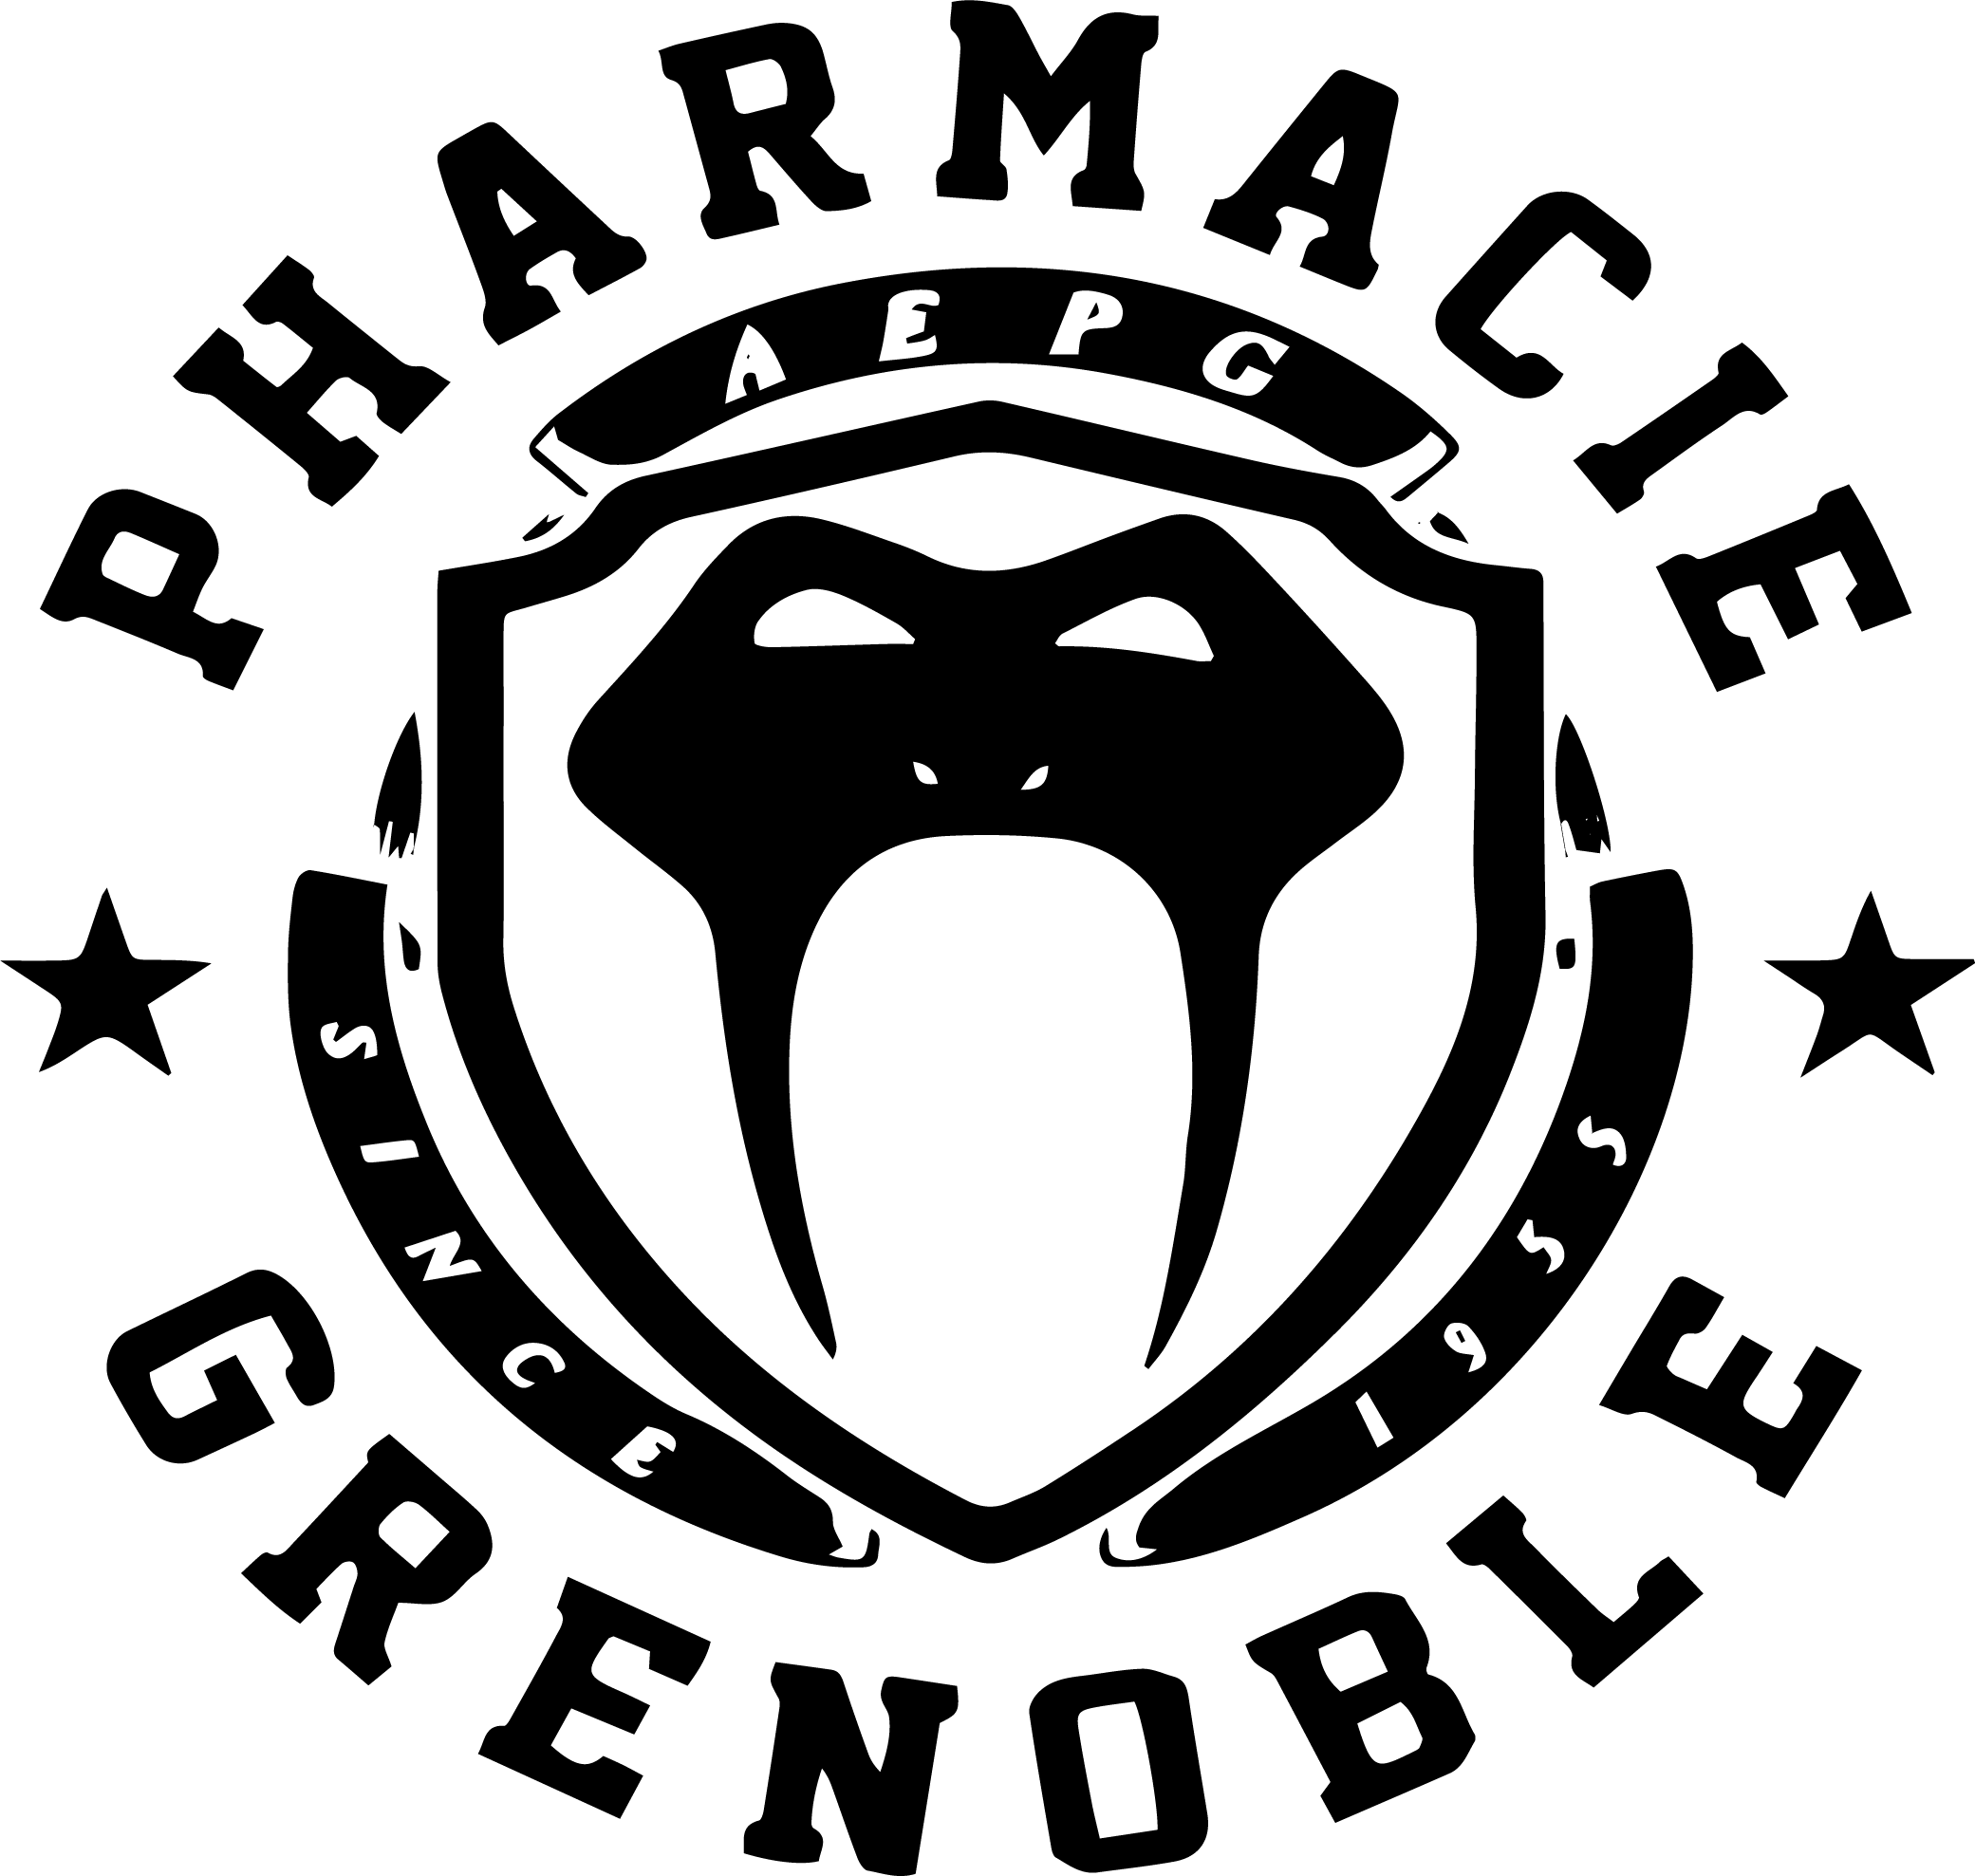 Association des Étudiants en Pharmacie de Grenoble (AEPG)